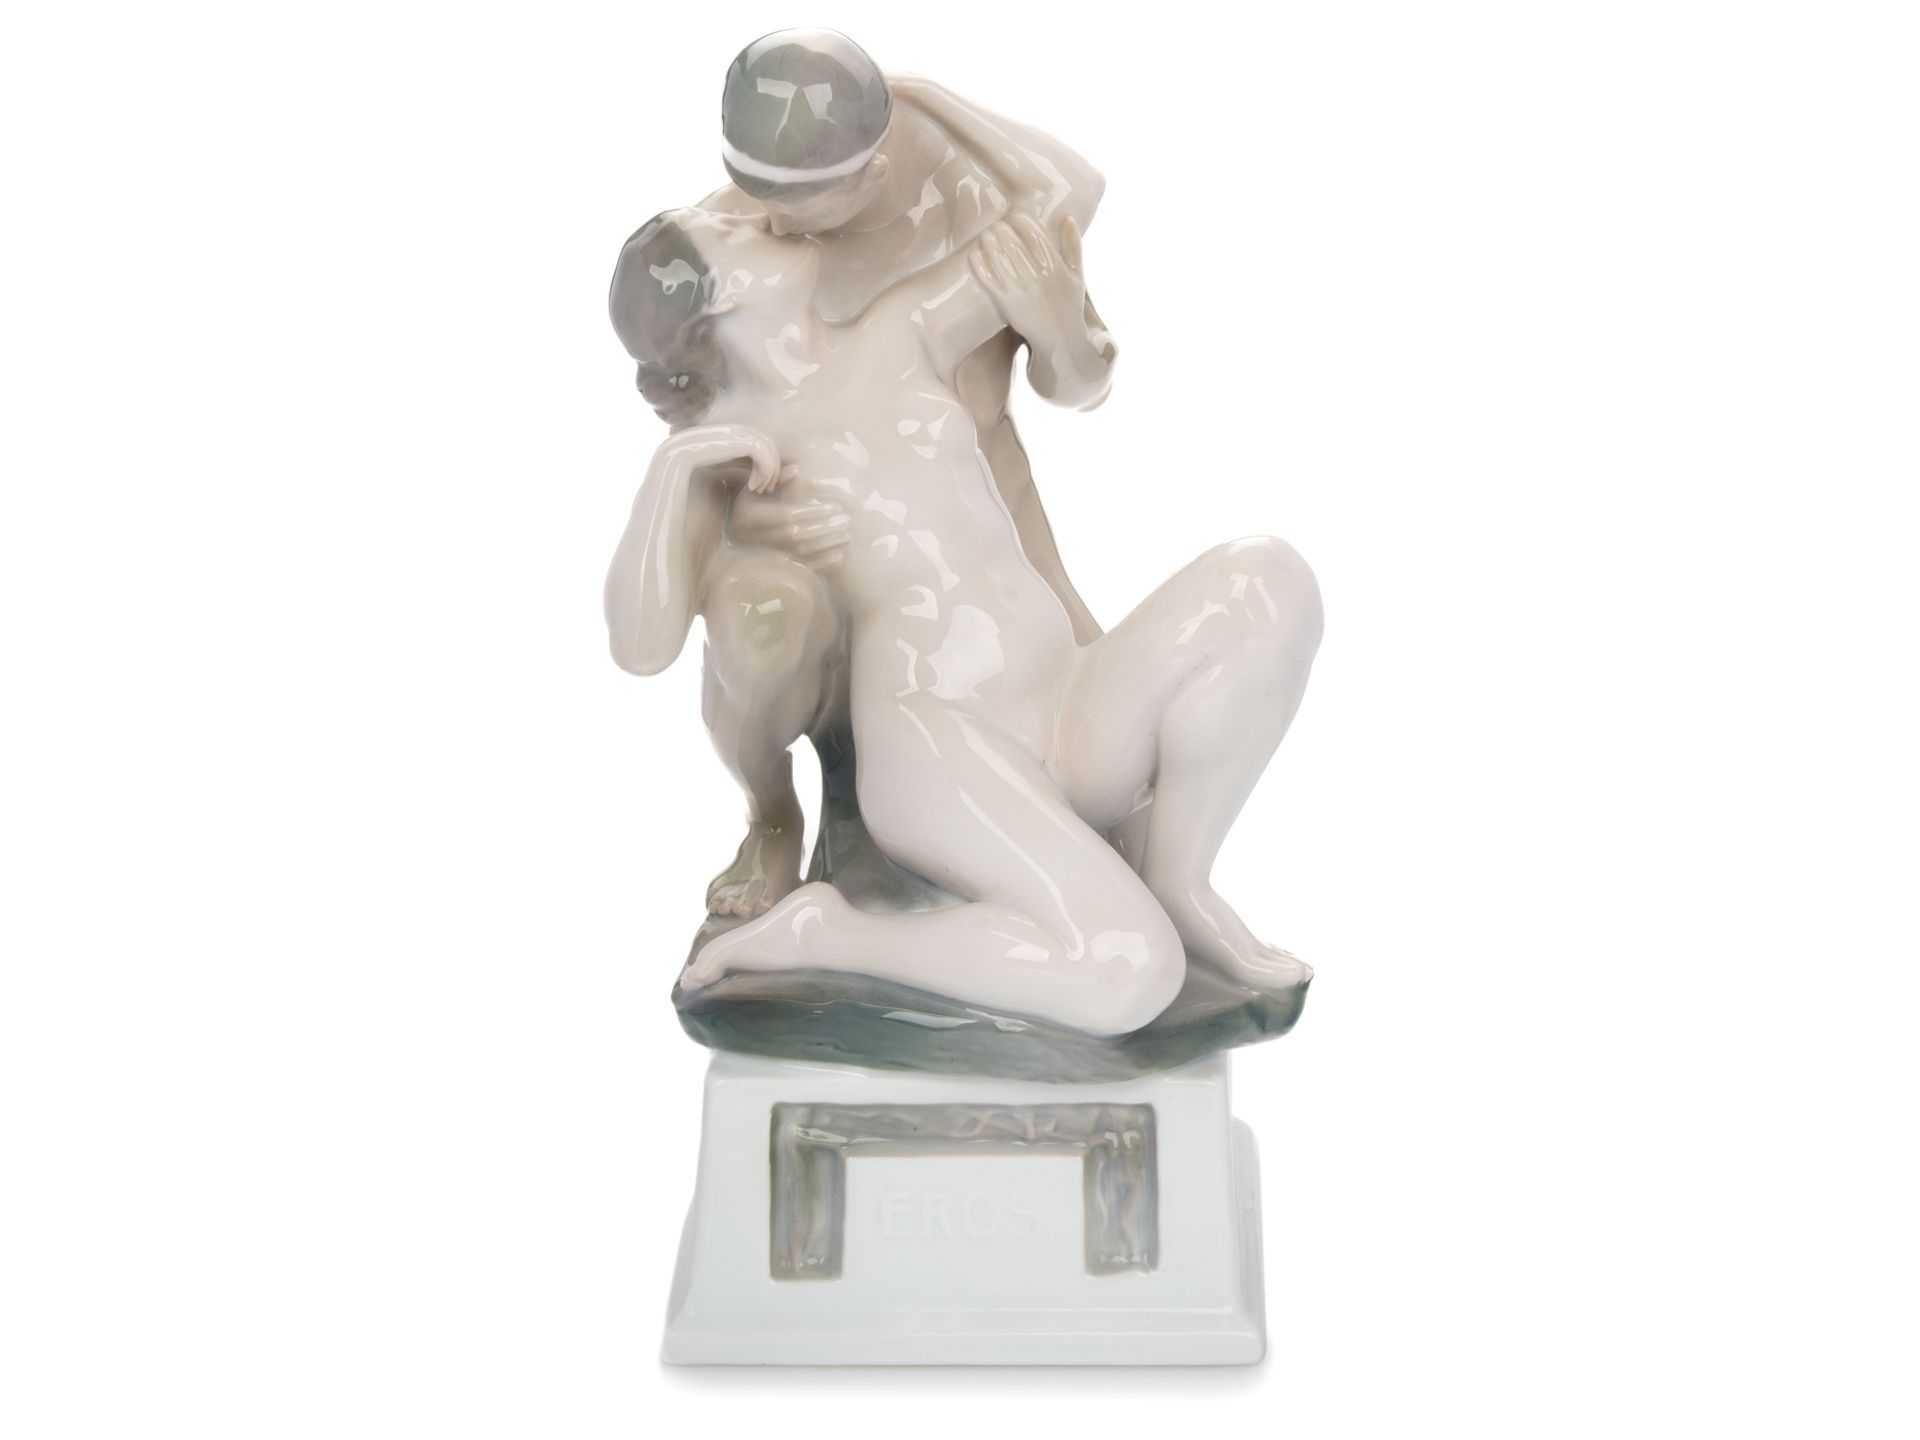 Richard Aigner (1867-1925) Rosenthal Sculpture Eros, 1912